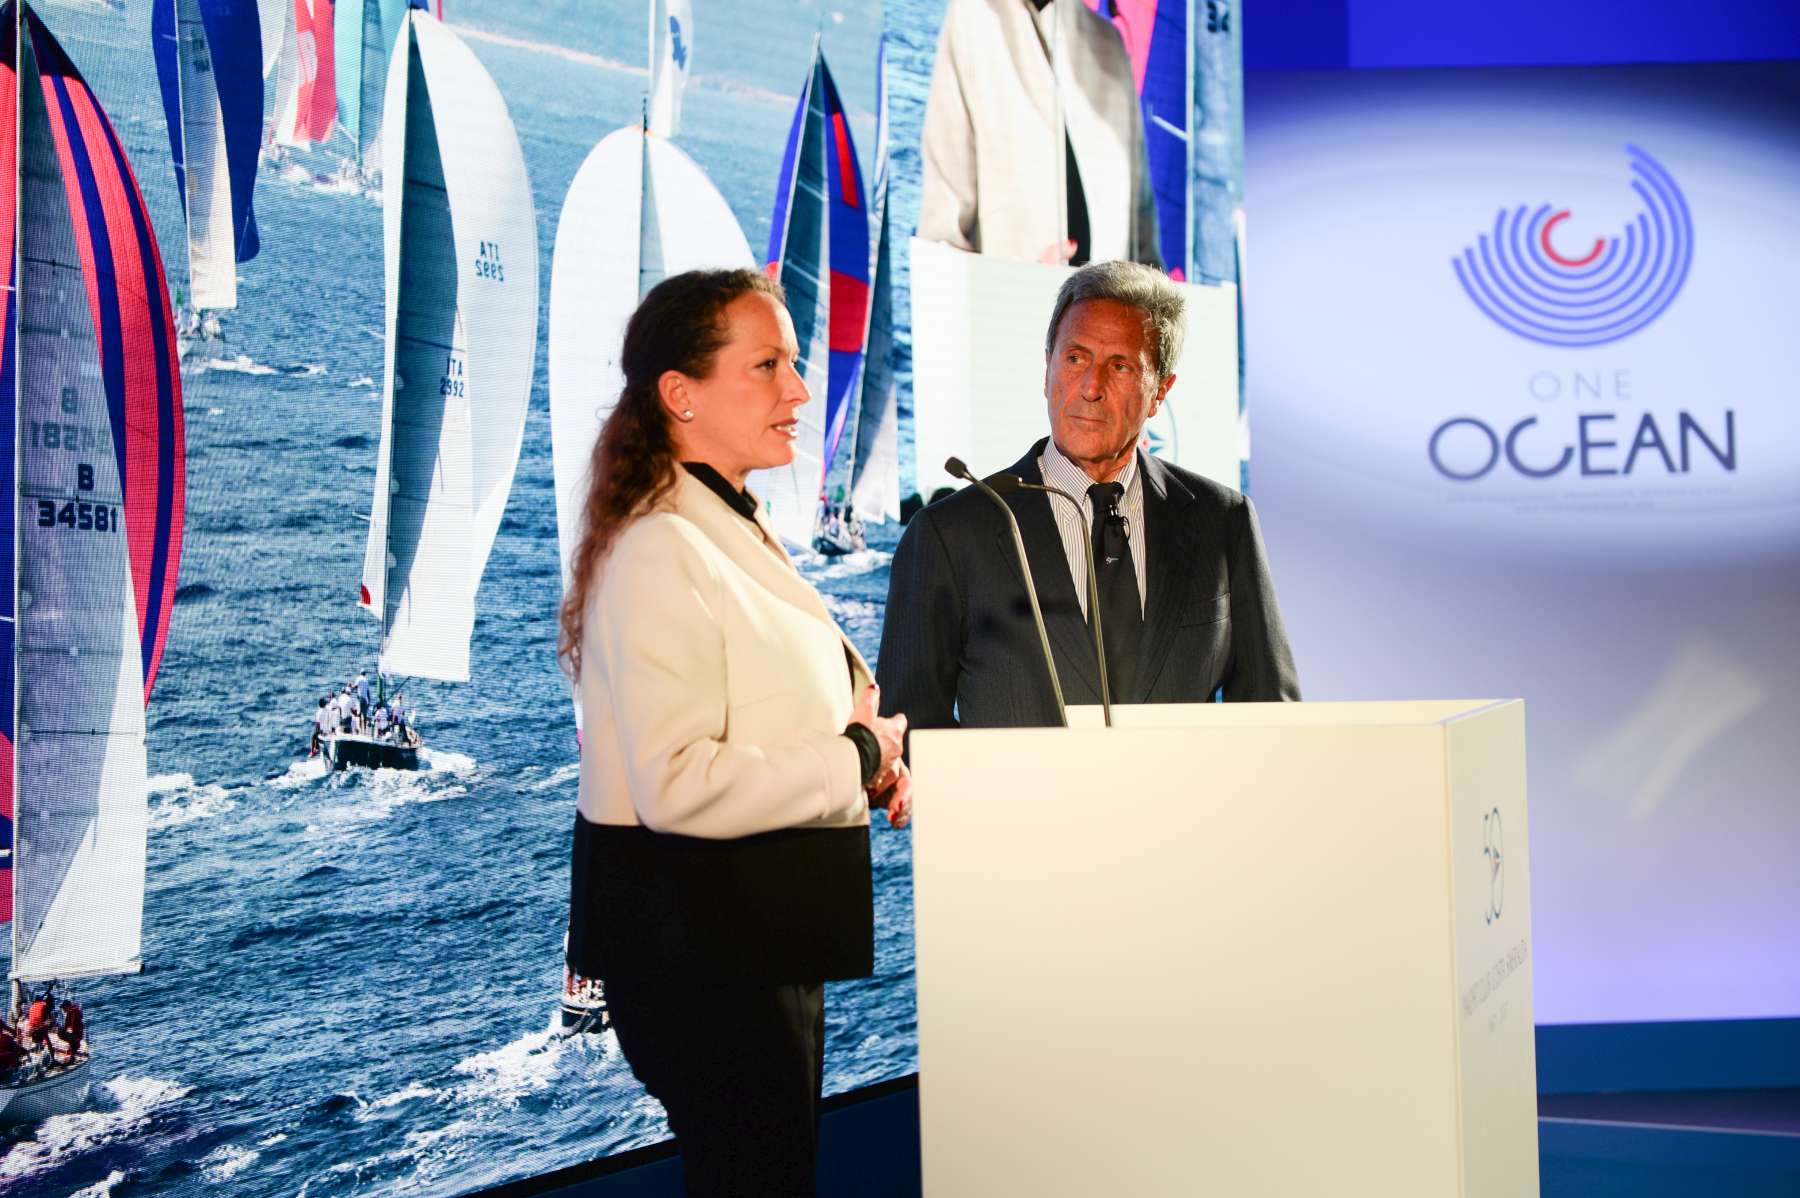 YCCS Press Conference Photos & videos online - NEWS - Yacht Club Costa Smeralda